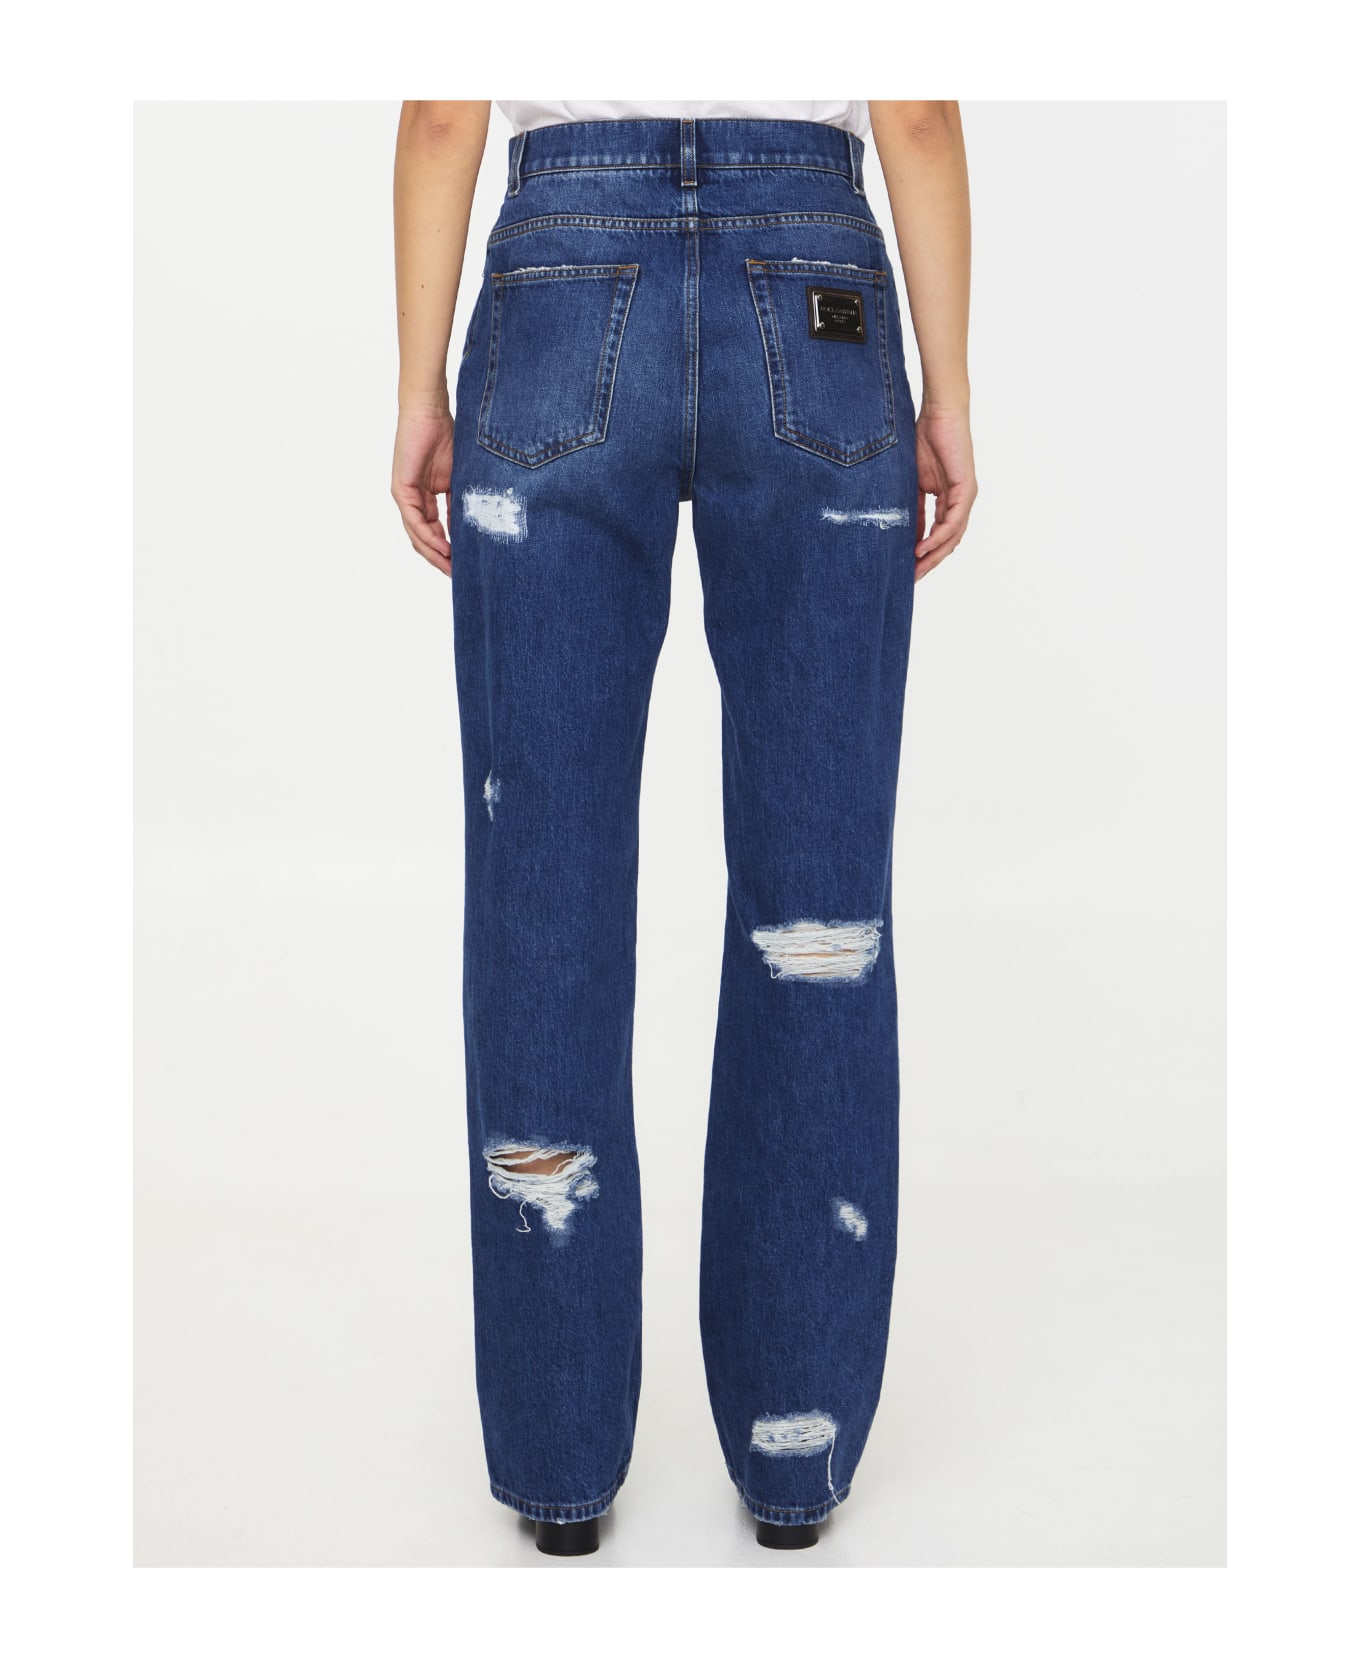 Dolce & Gabbana Distressed Jeans With Leo Print - LIGHT BLUE デニム